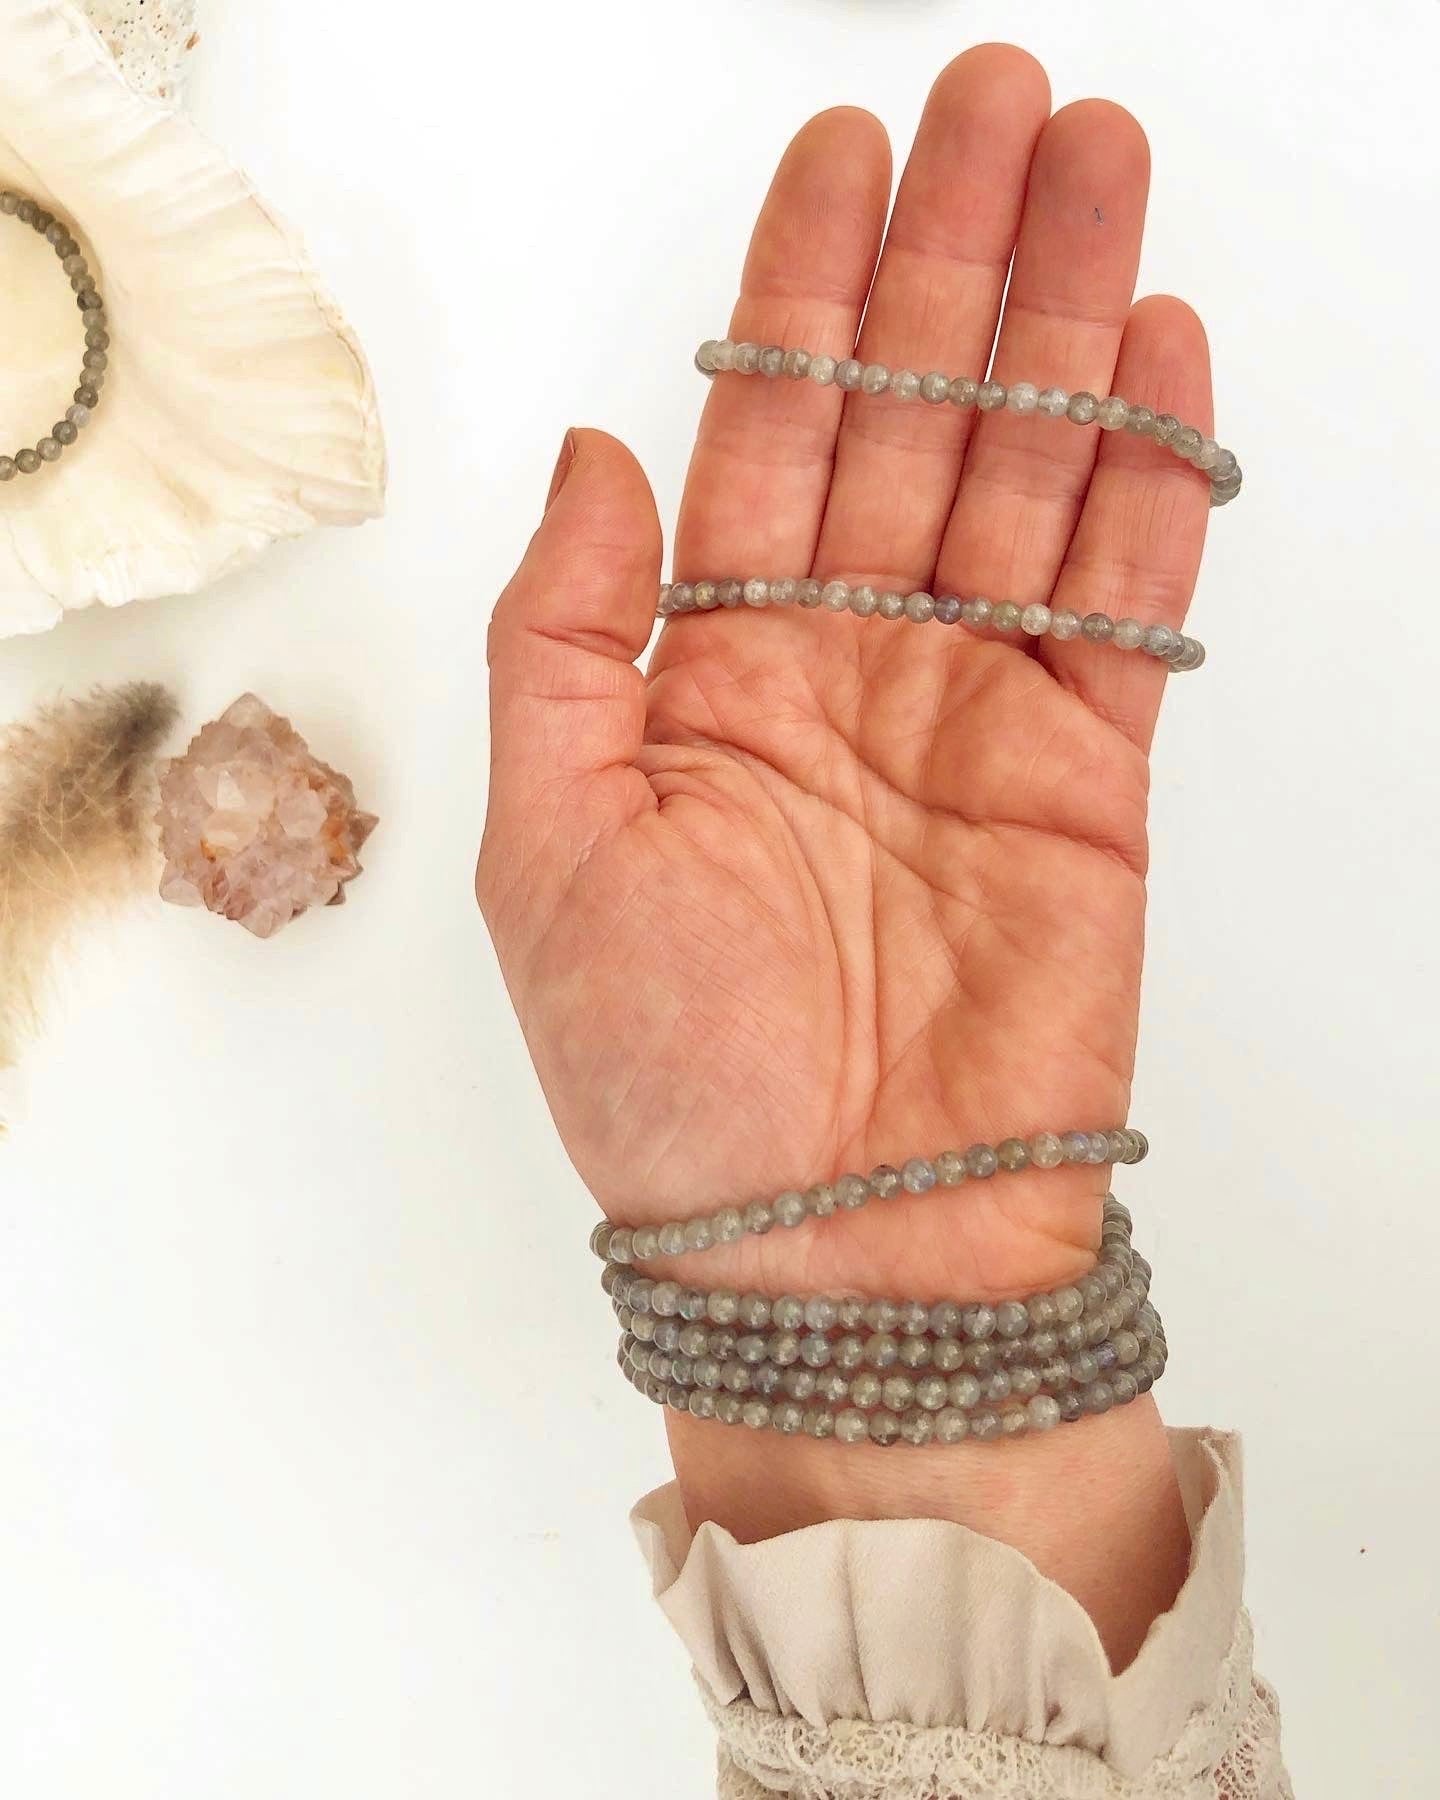 Månesøster Krystaller Labradorit Armbånd ☾ Spirituelle evner, styrke, transformation & beskyttelse ☾ (4mm)